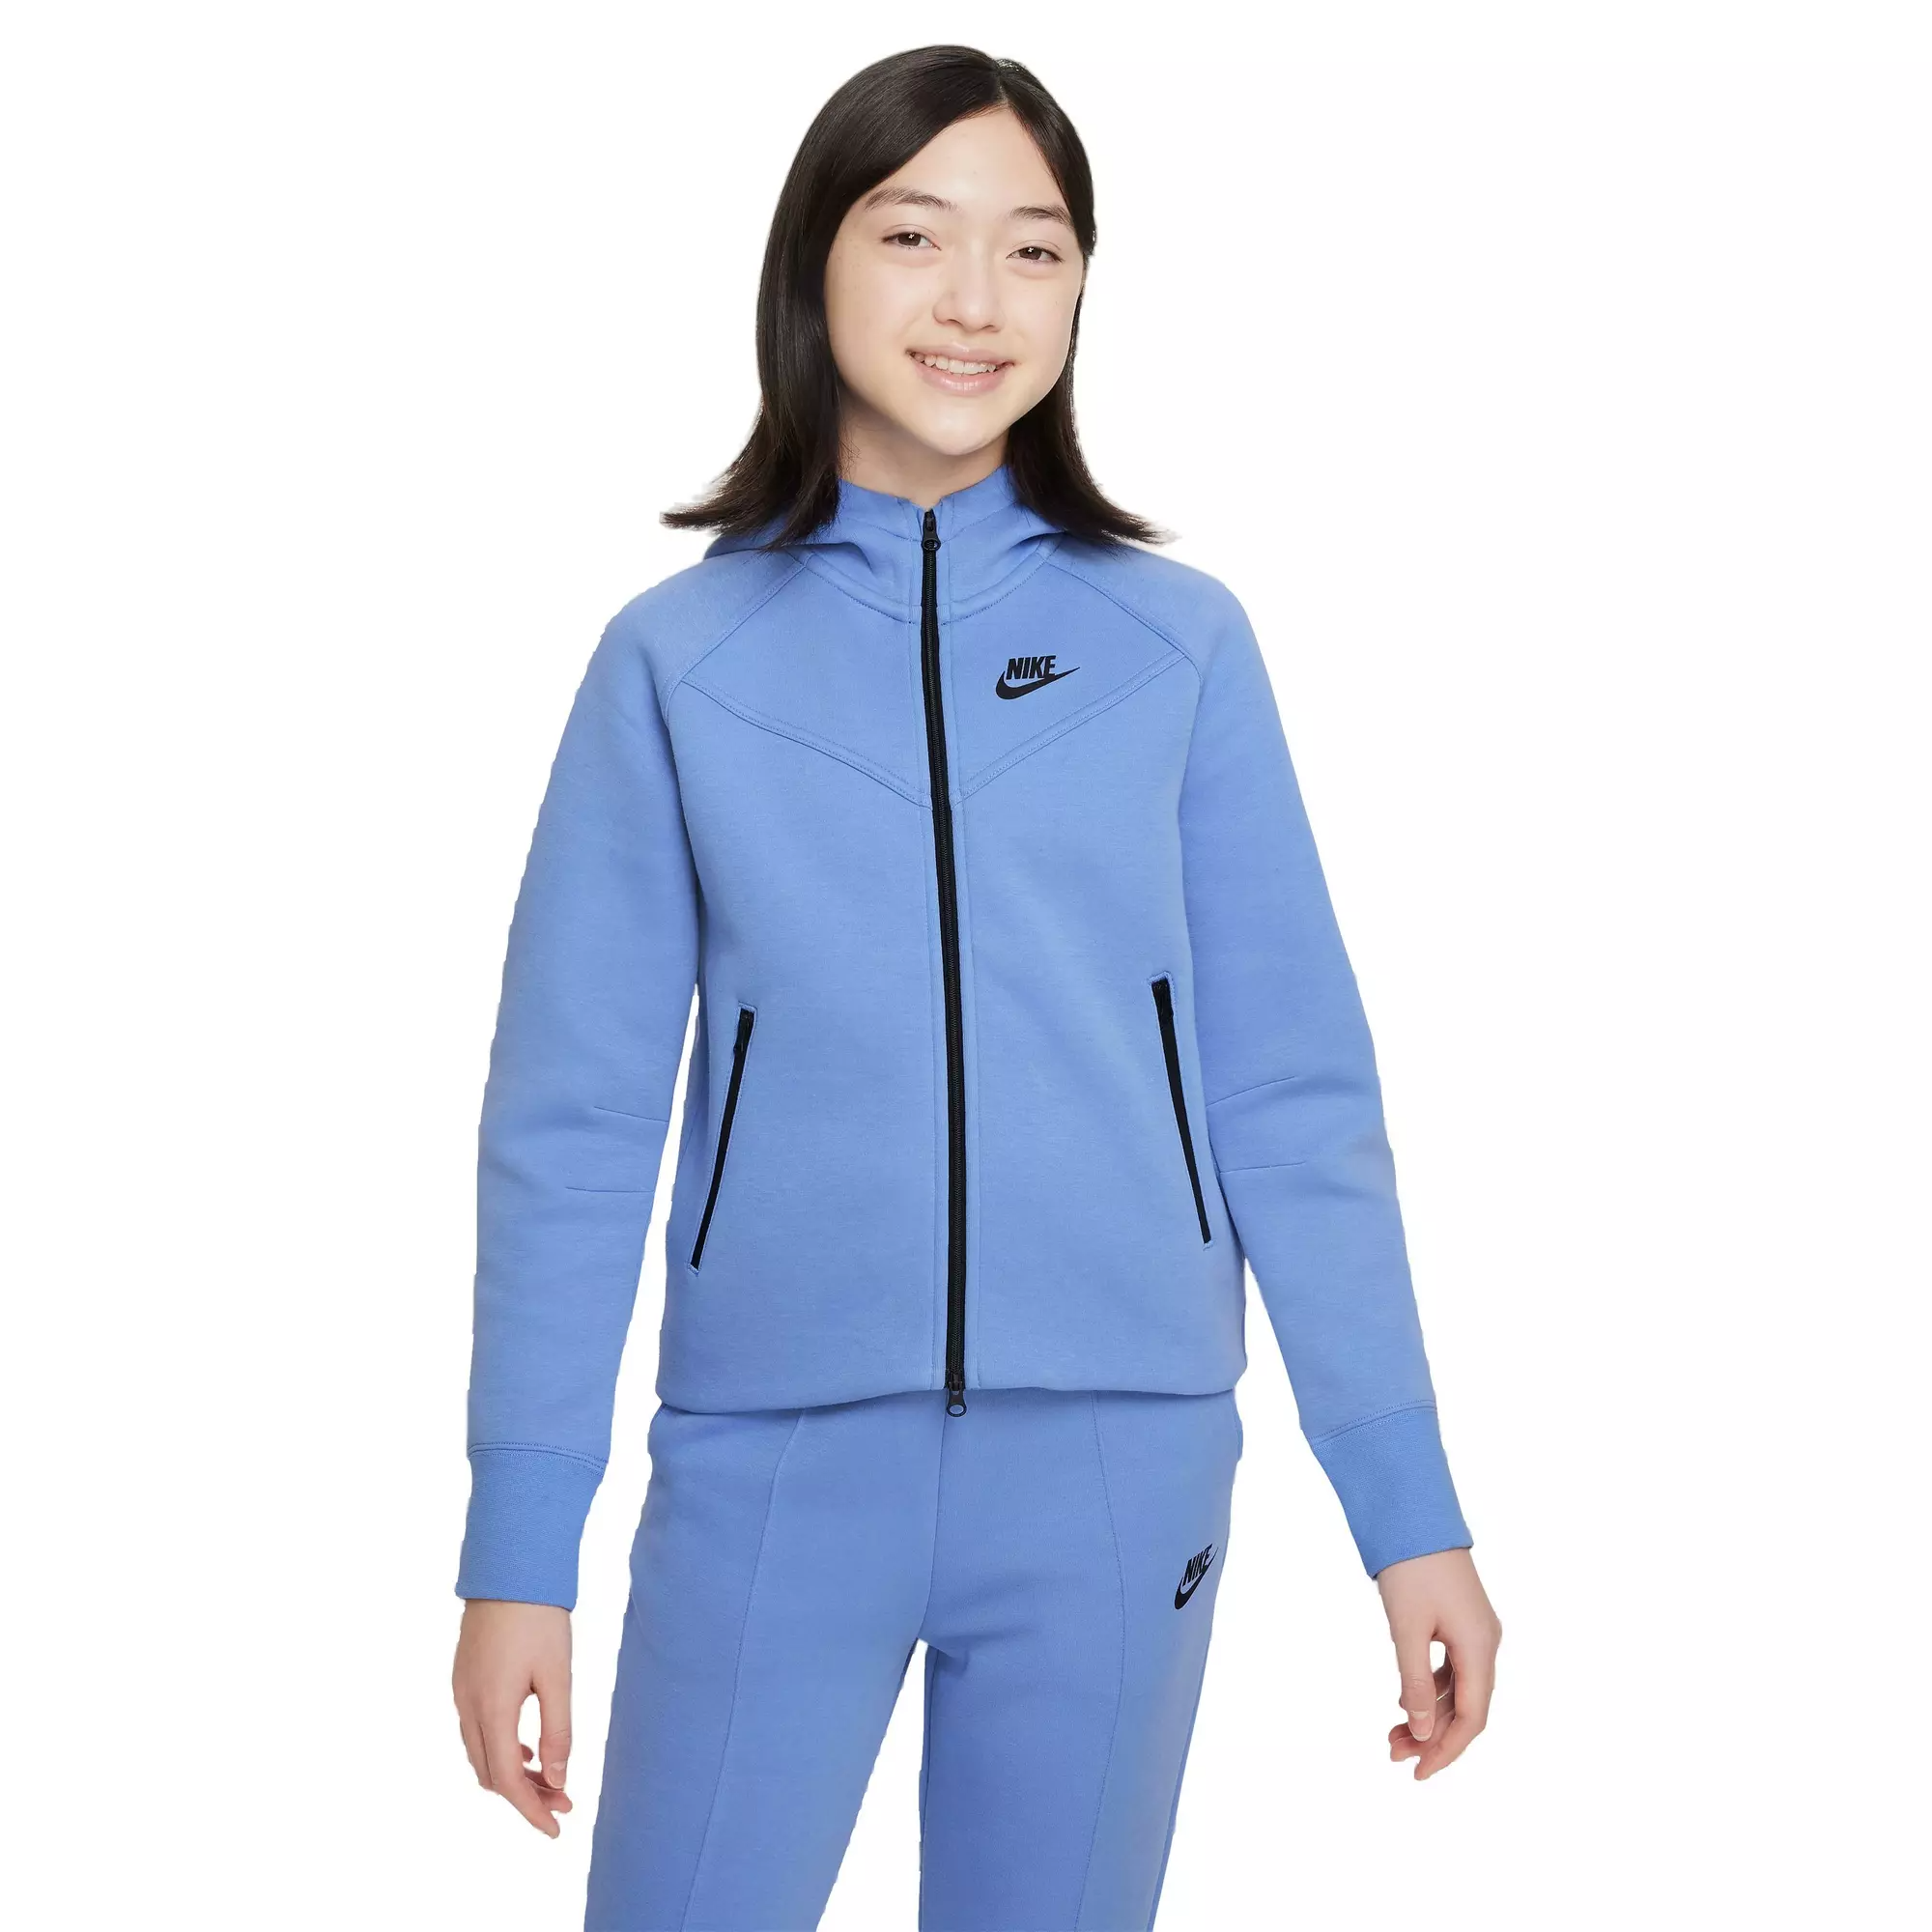 Adidas girl tech fleece hoodie/leggings outfit set Blue size M (10-12) NWT